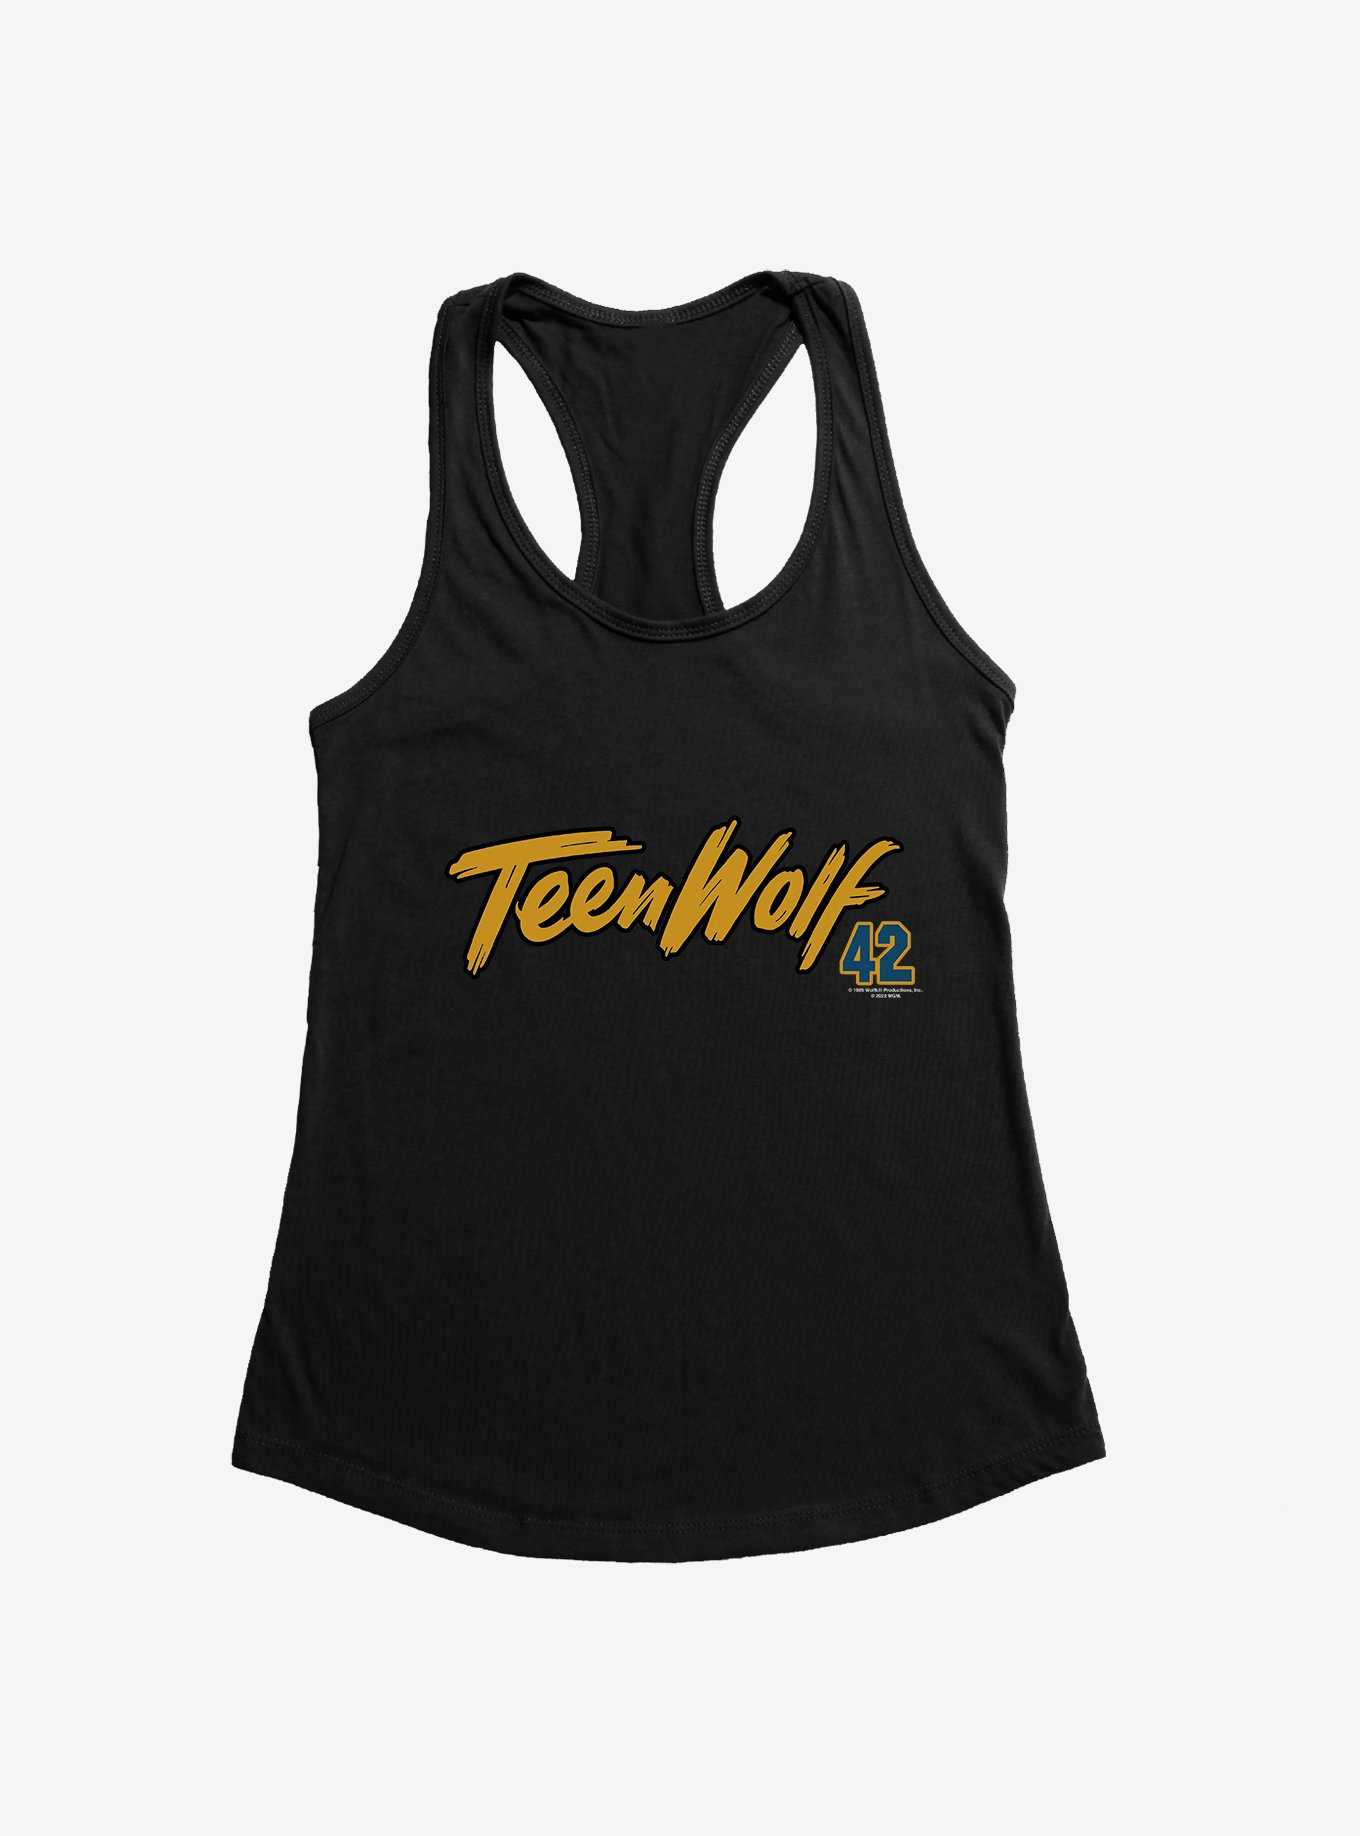 Teen Wolf TeenWolf 42 Womens Tank Top, , hi-res